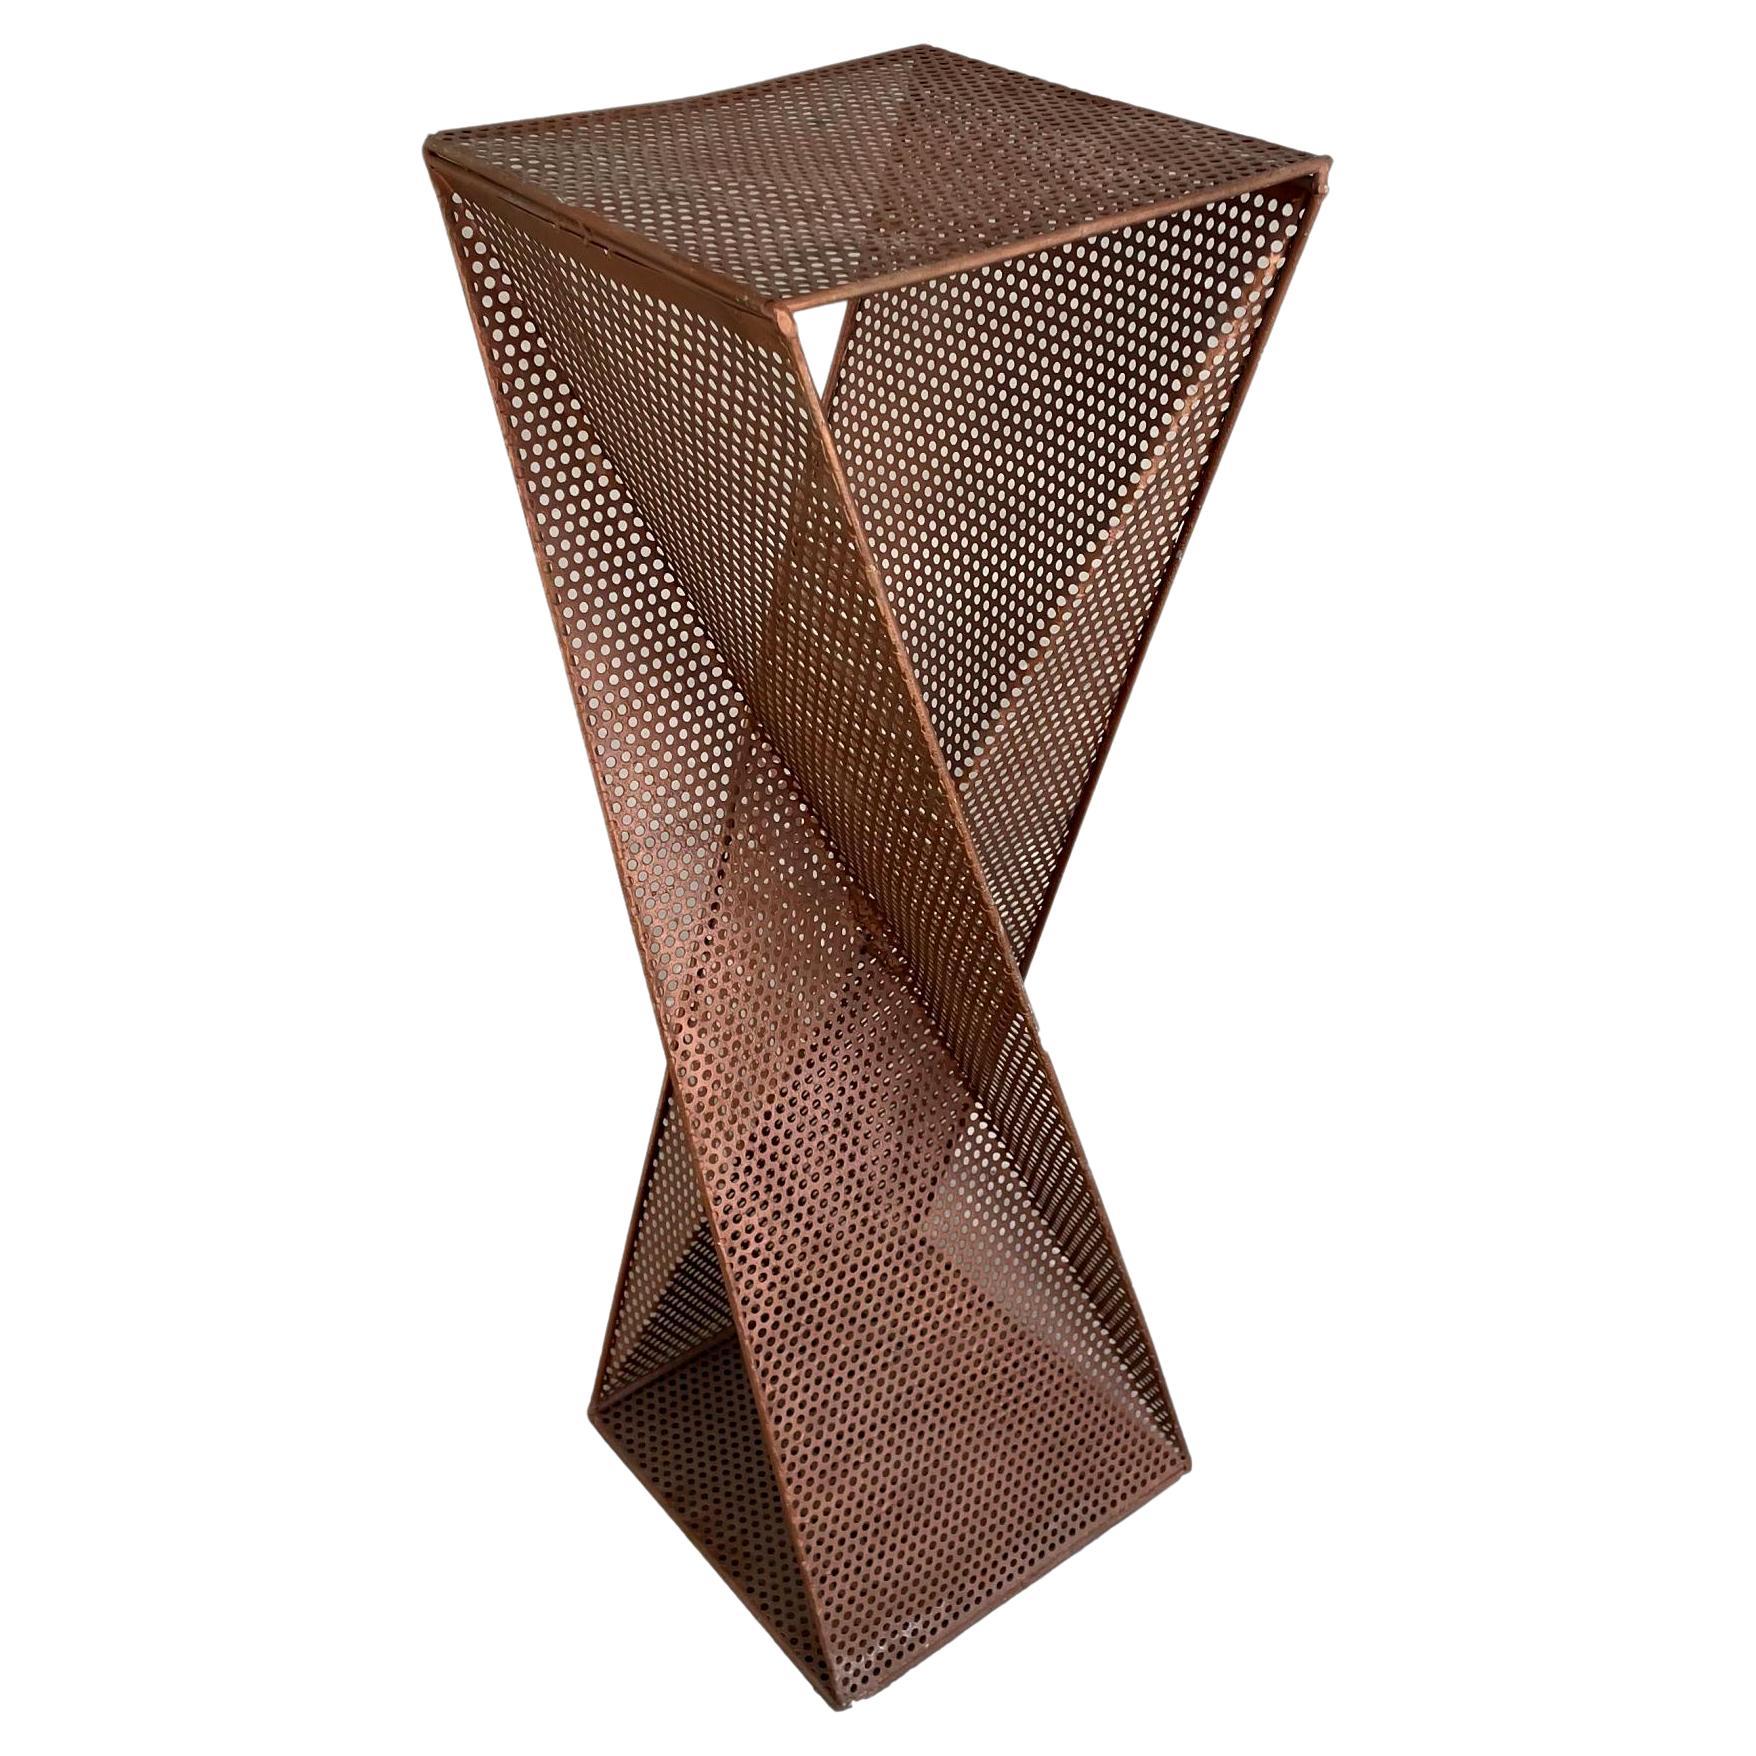 Perforated Metal Pedestal in the Style of Mathieu Matégot